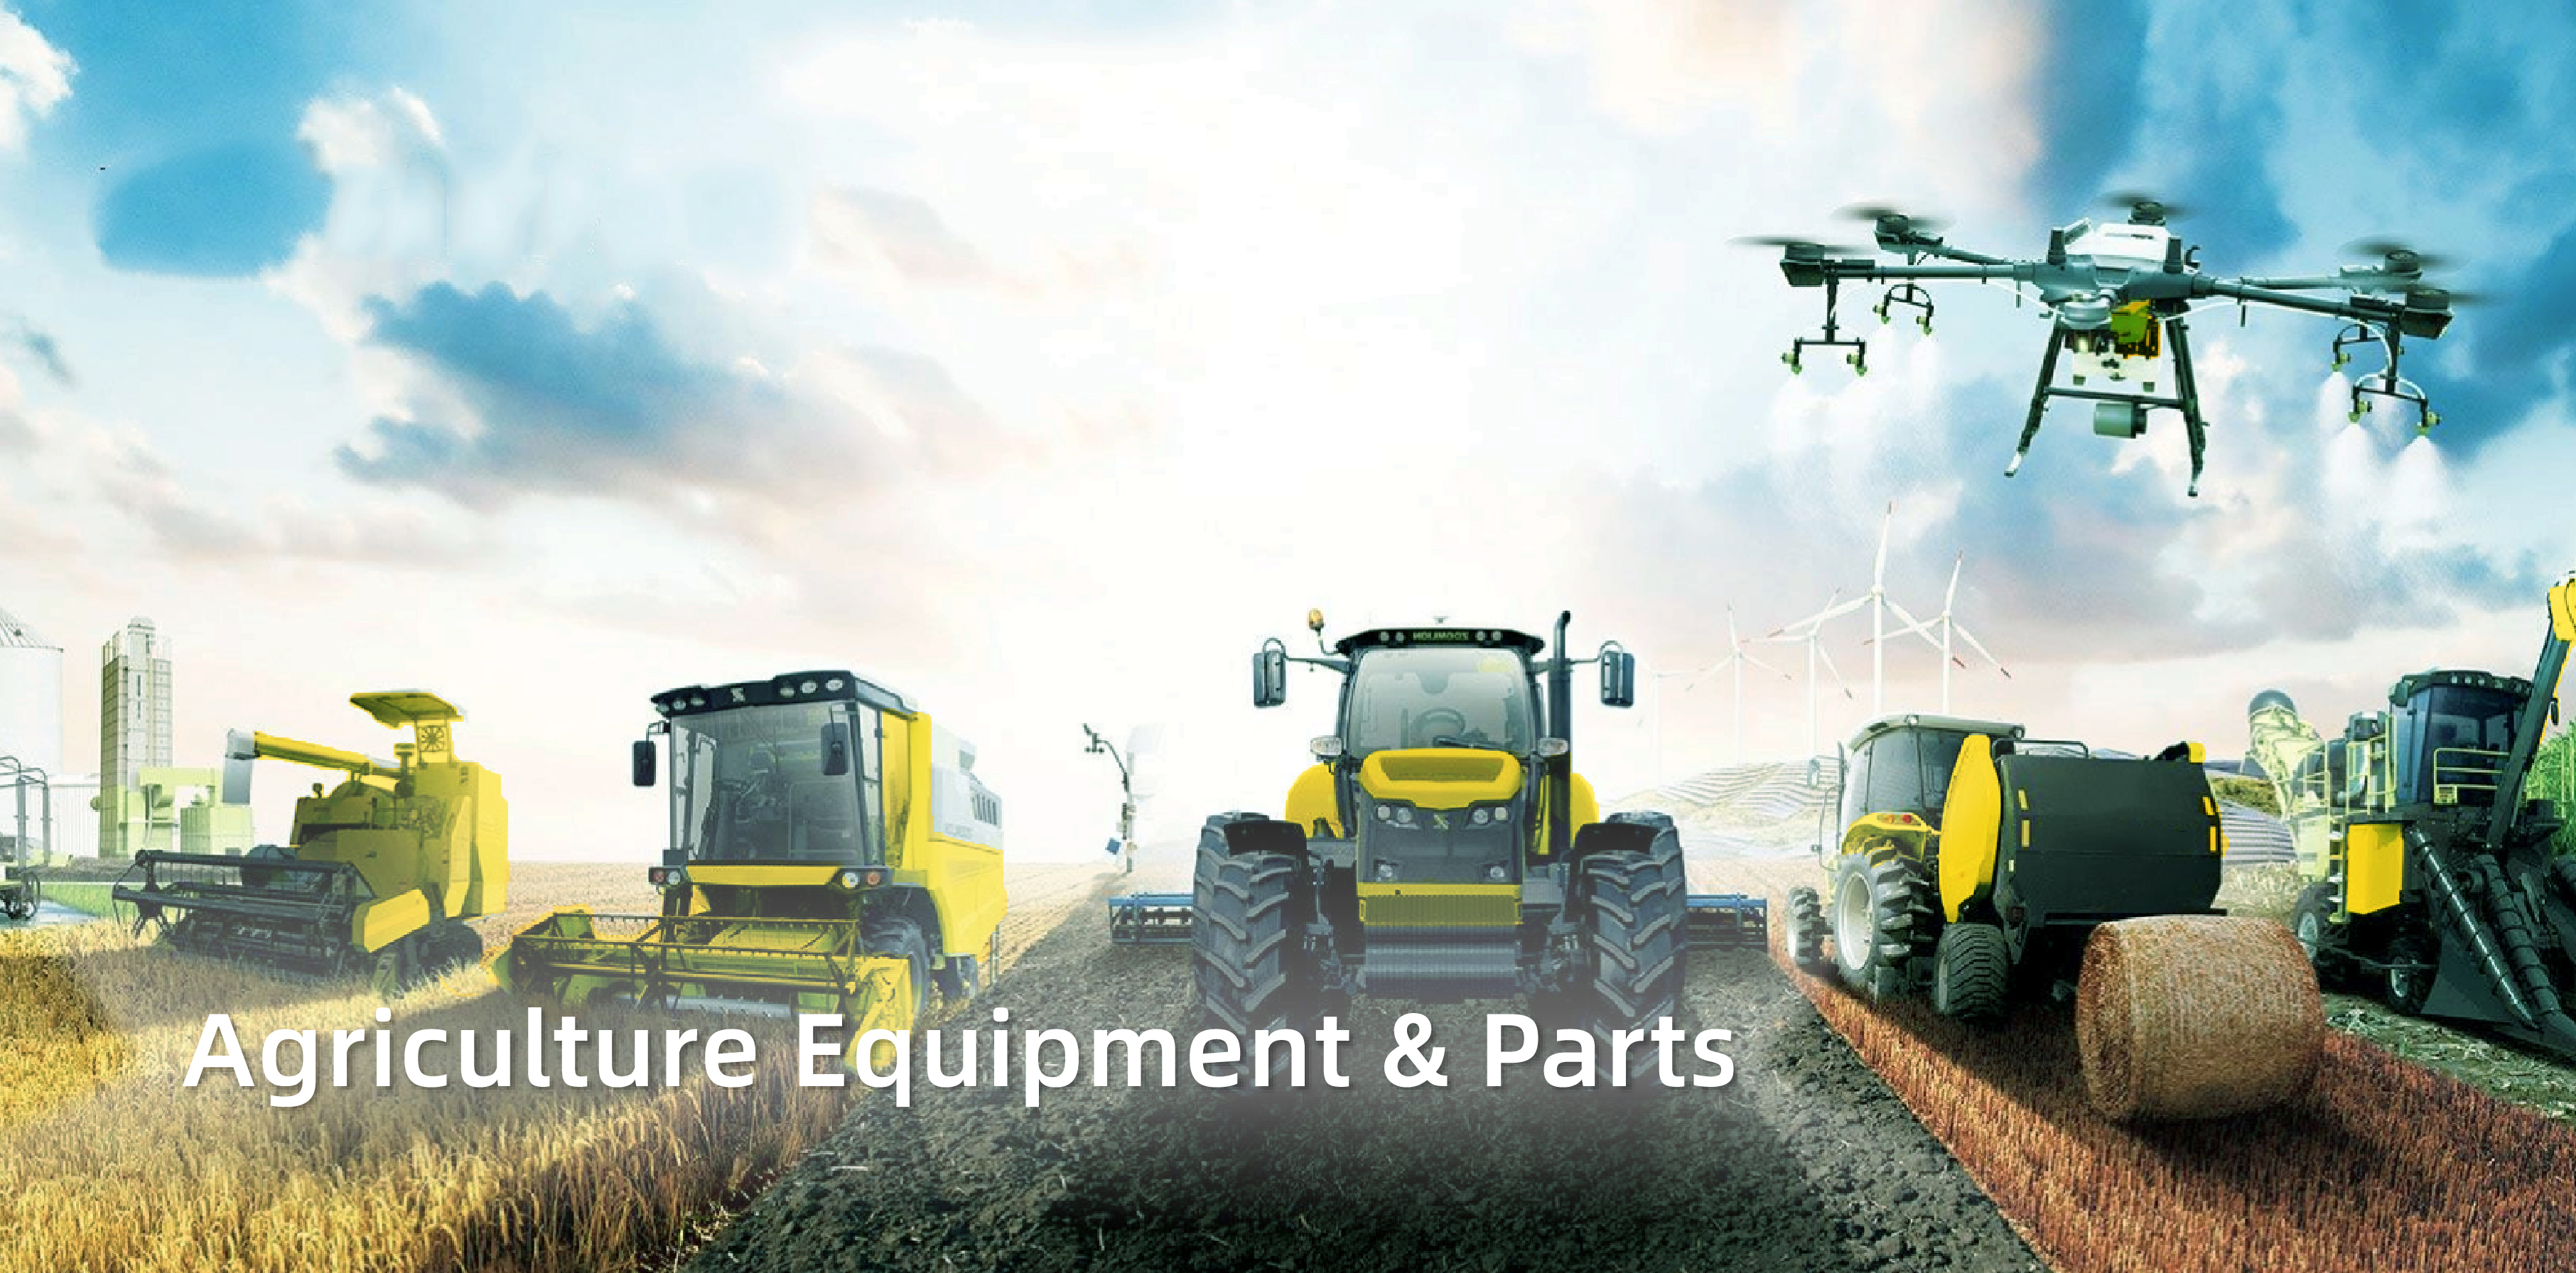  Agriculture Equipment & Parts